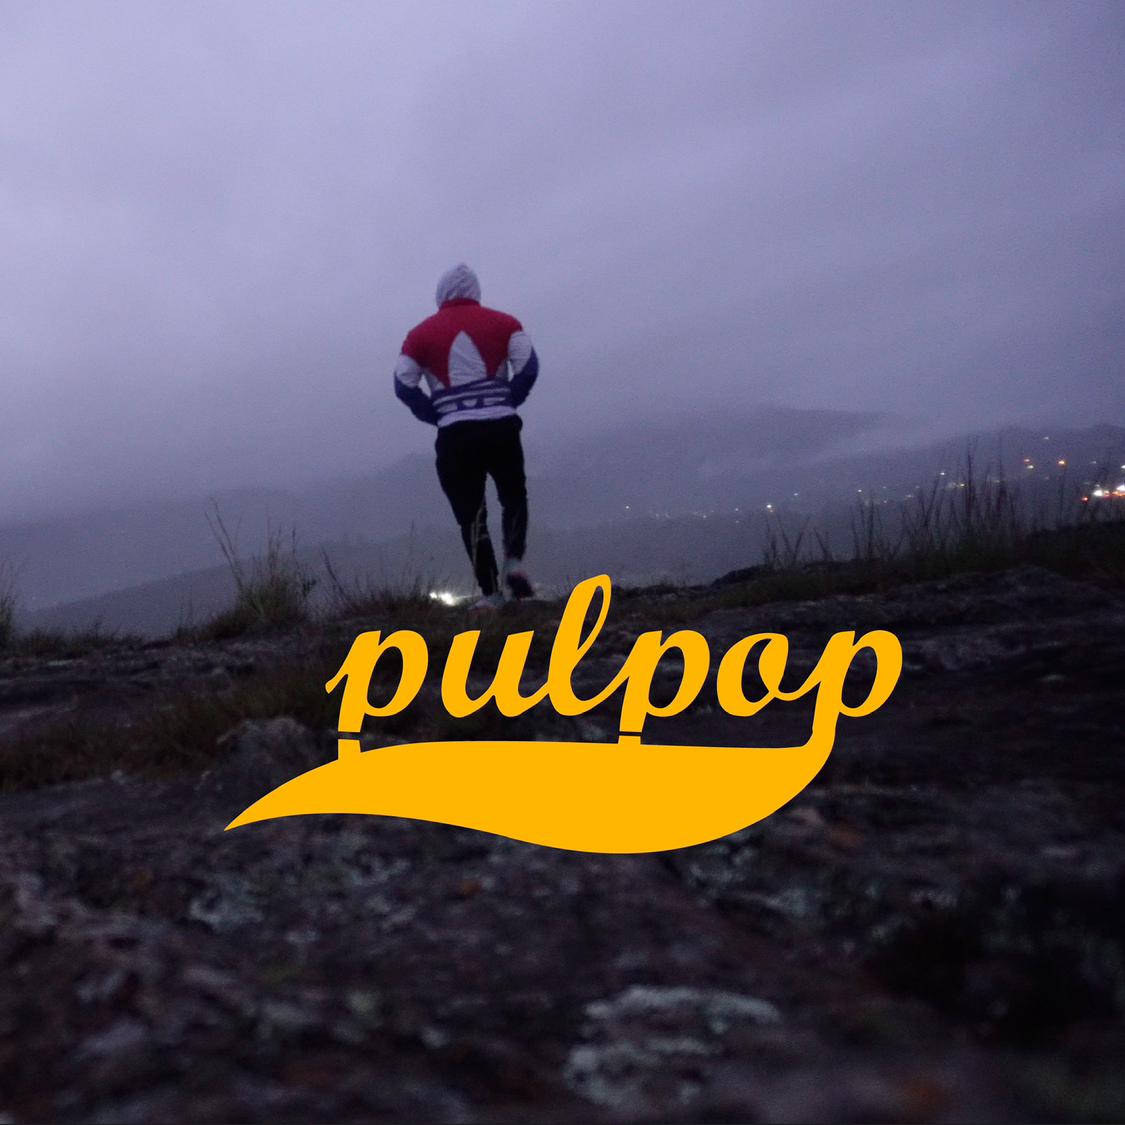 Pulpop's images